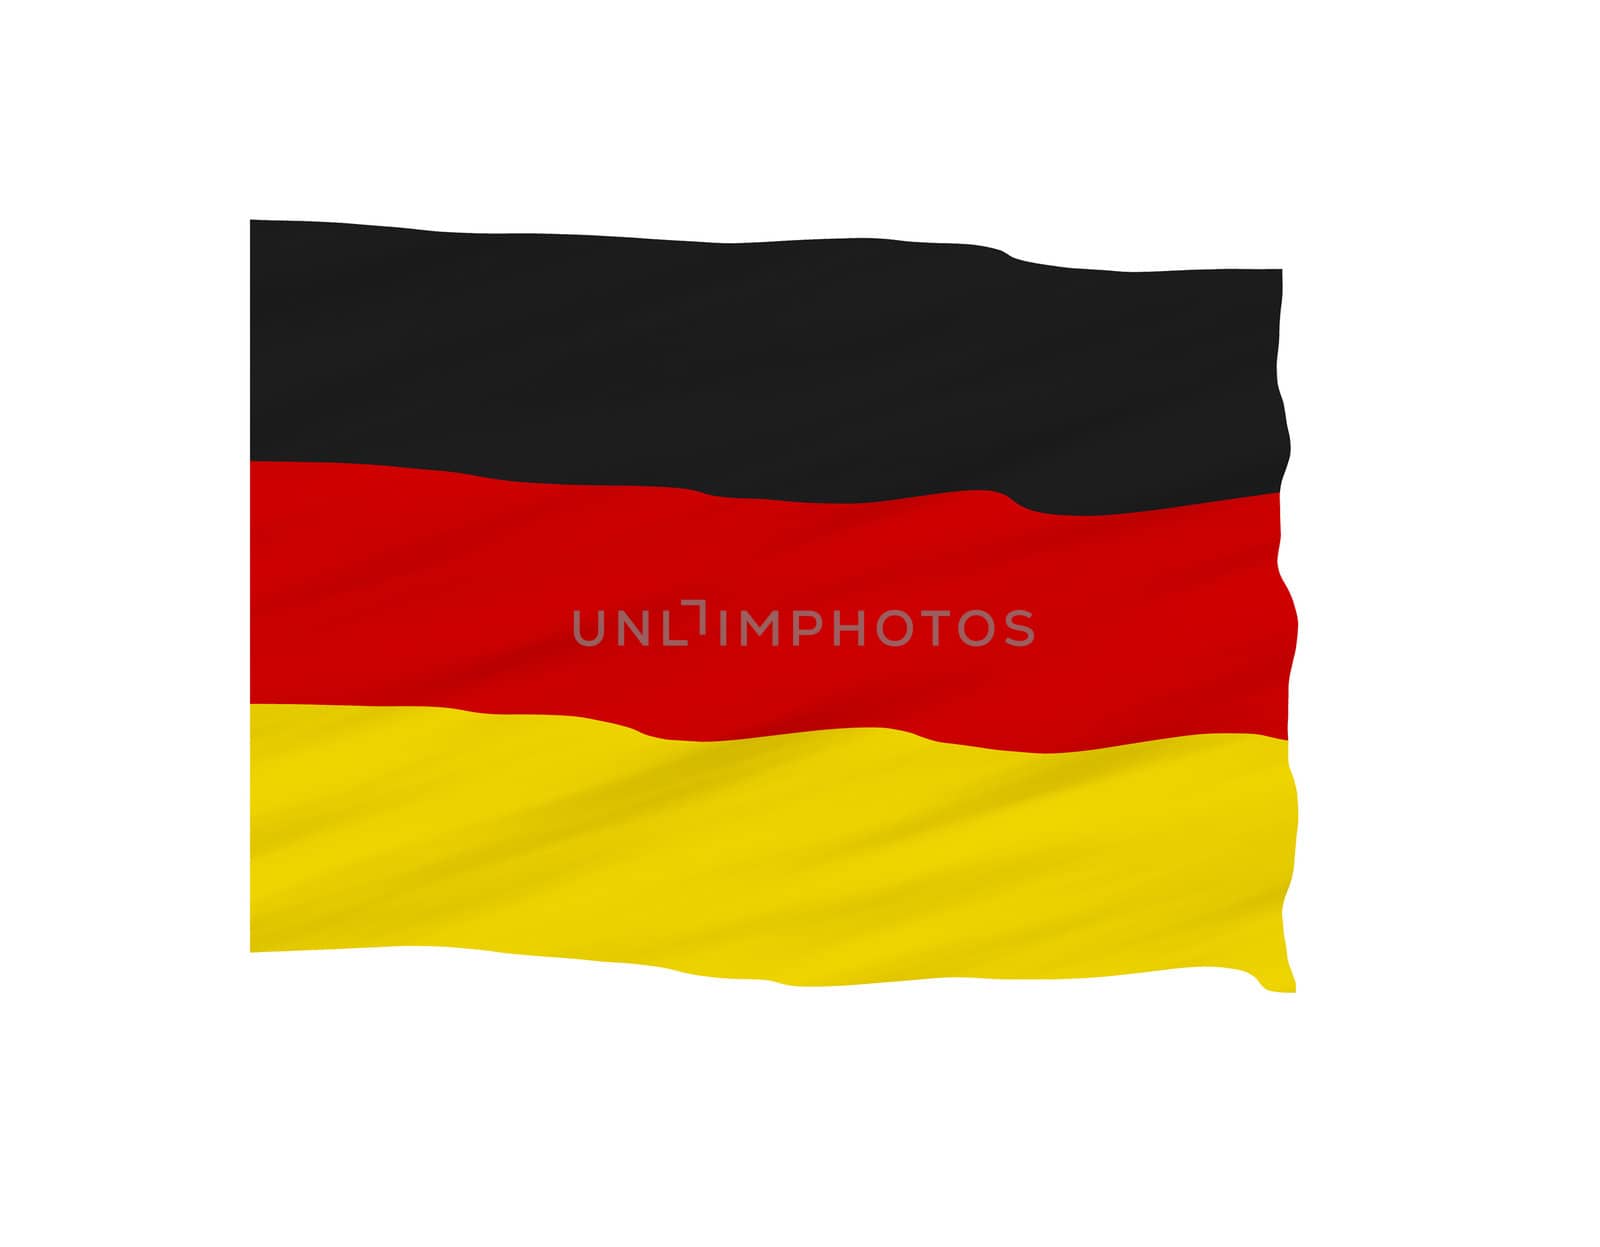 A nice image of the German flag